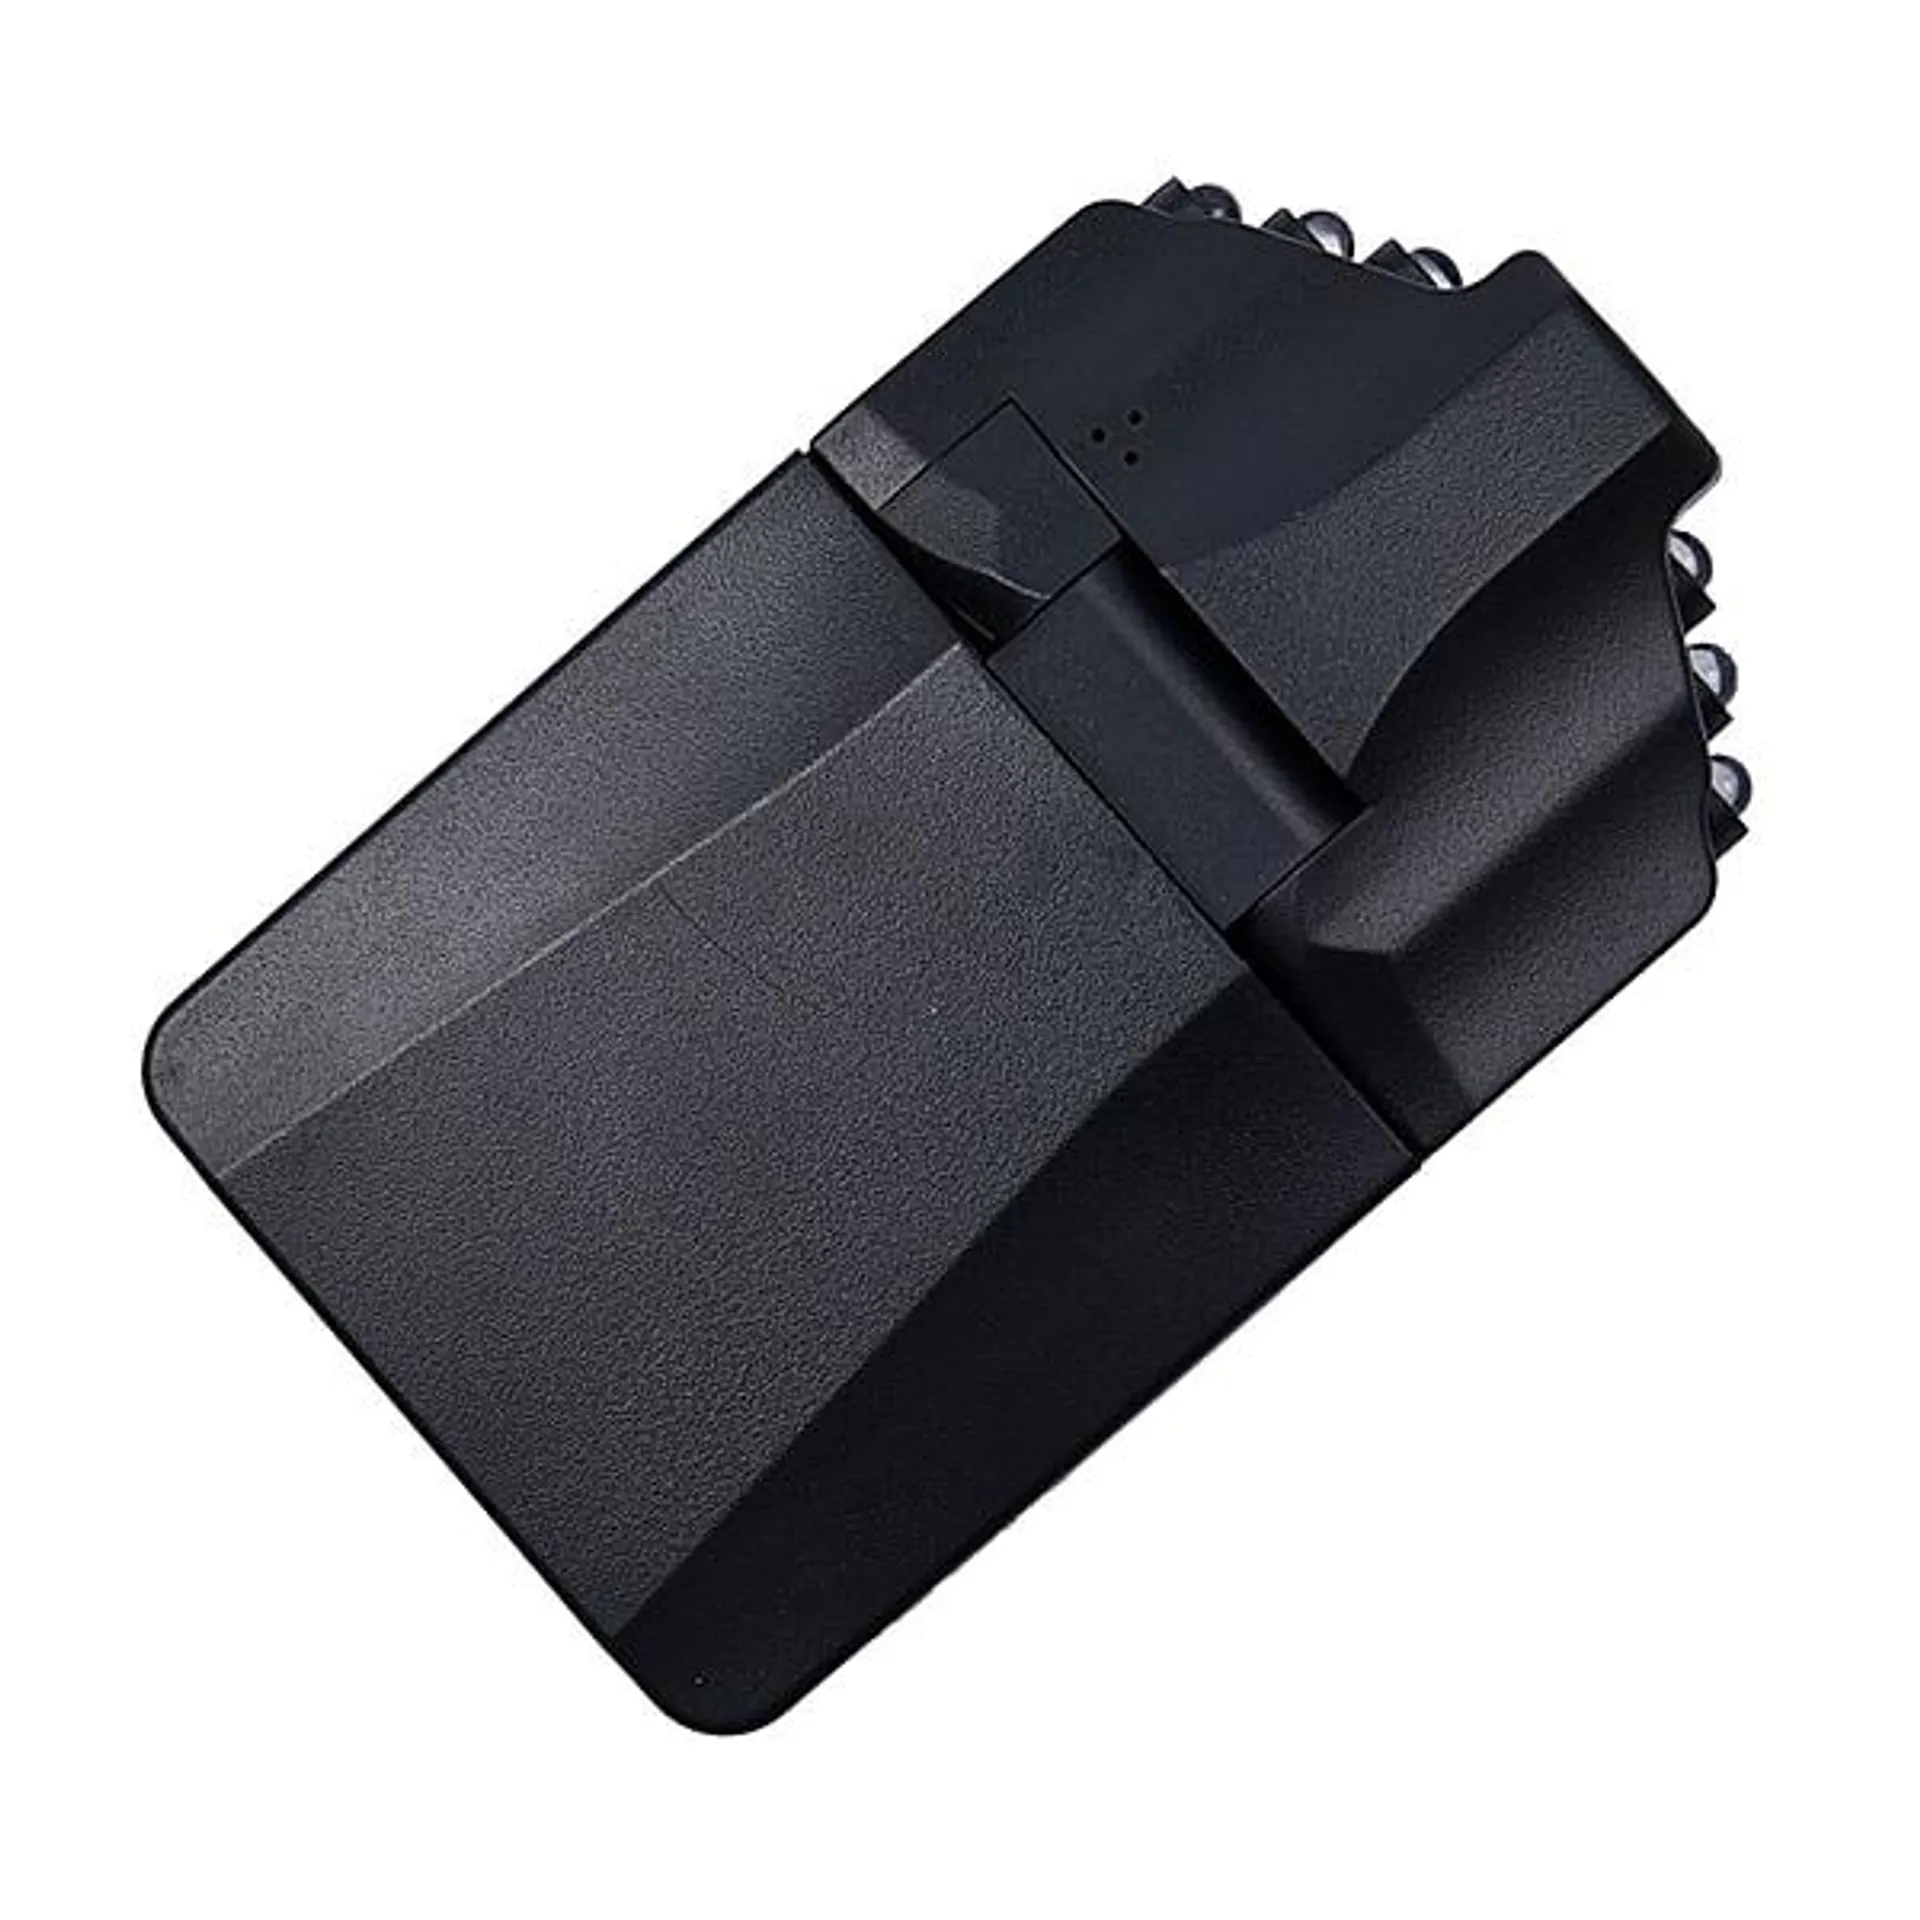 Dash Cam Plus with 8GB Memory Card - Black